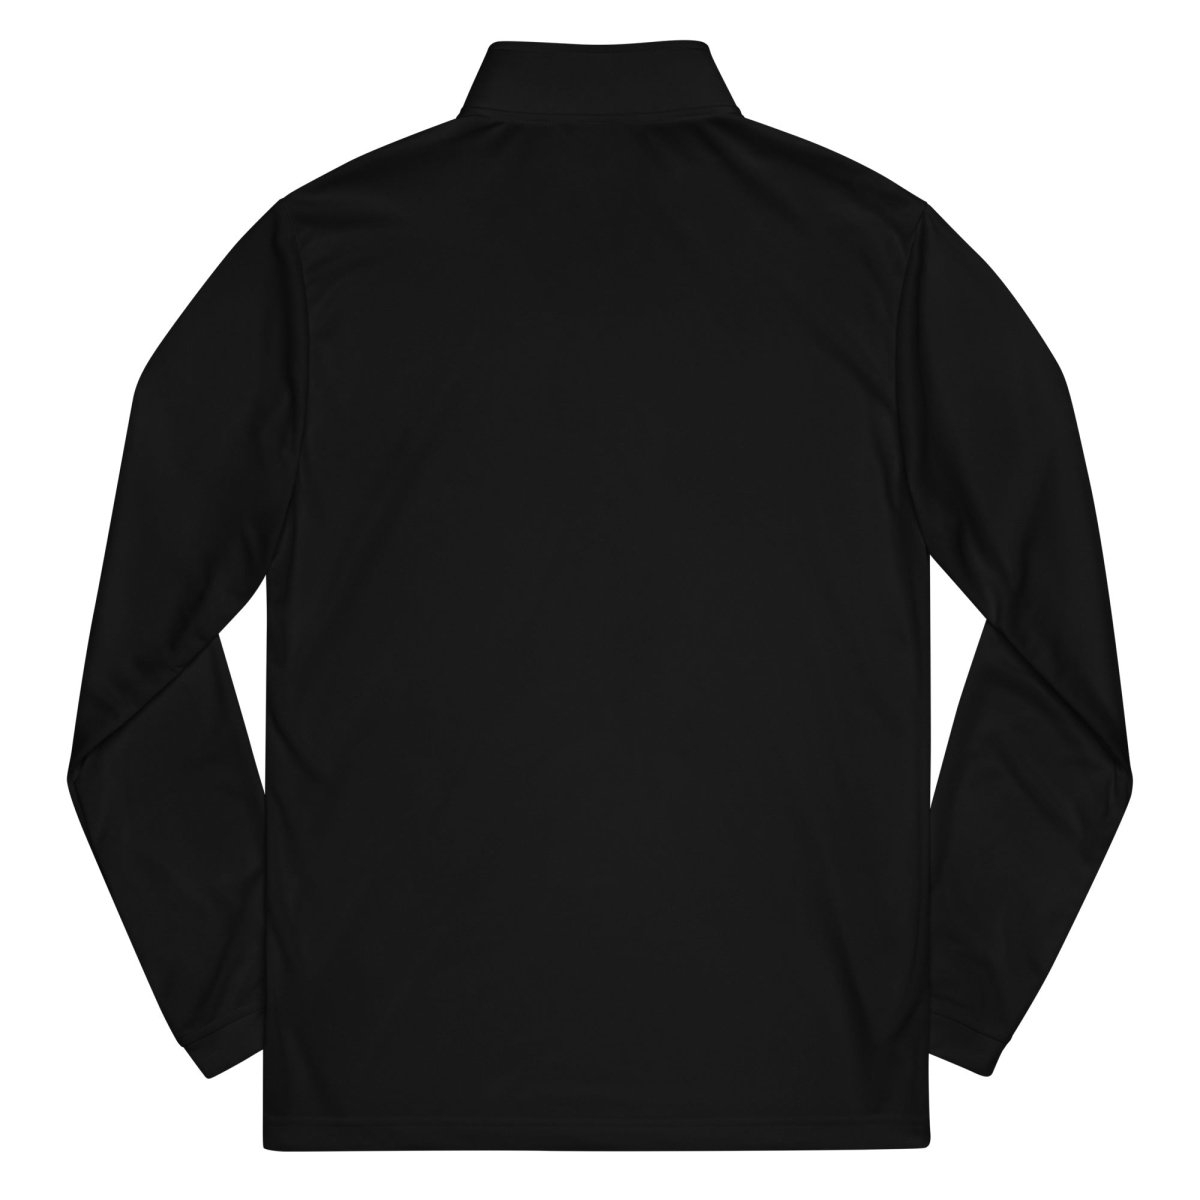 Quarter zip pullover - DIGISTARS